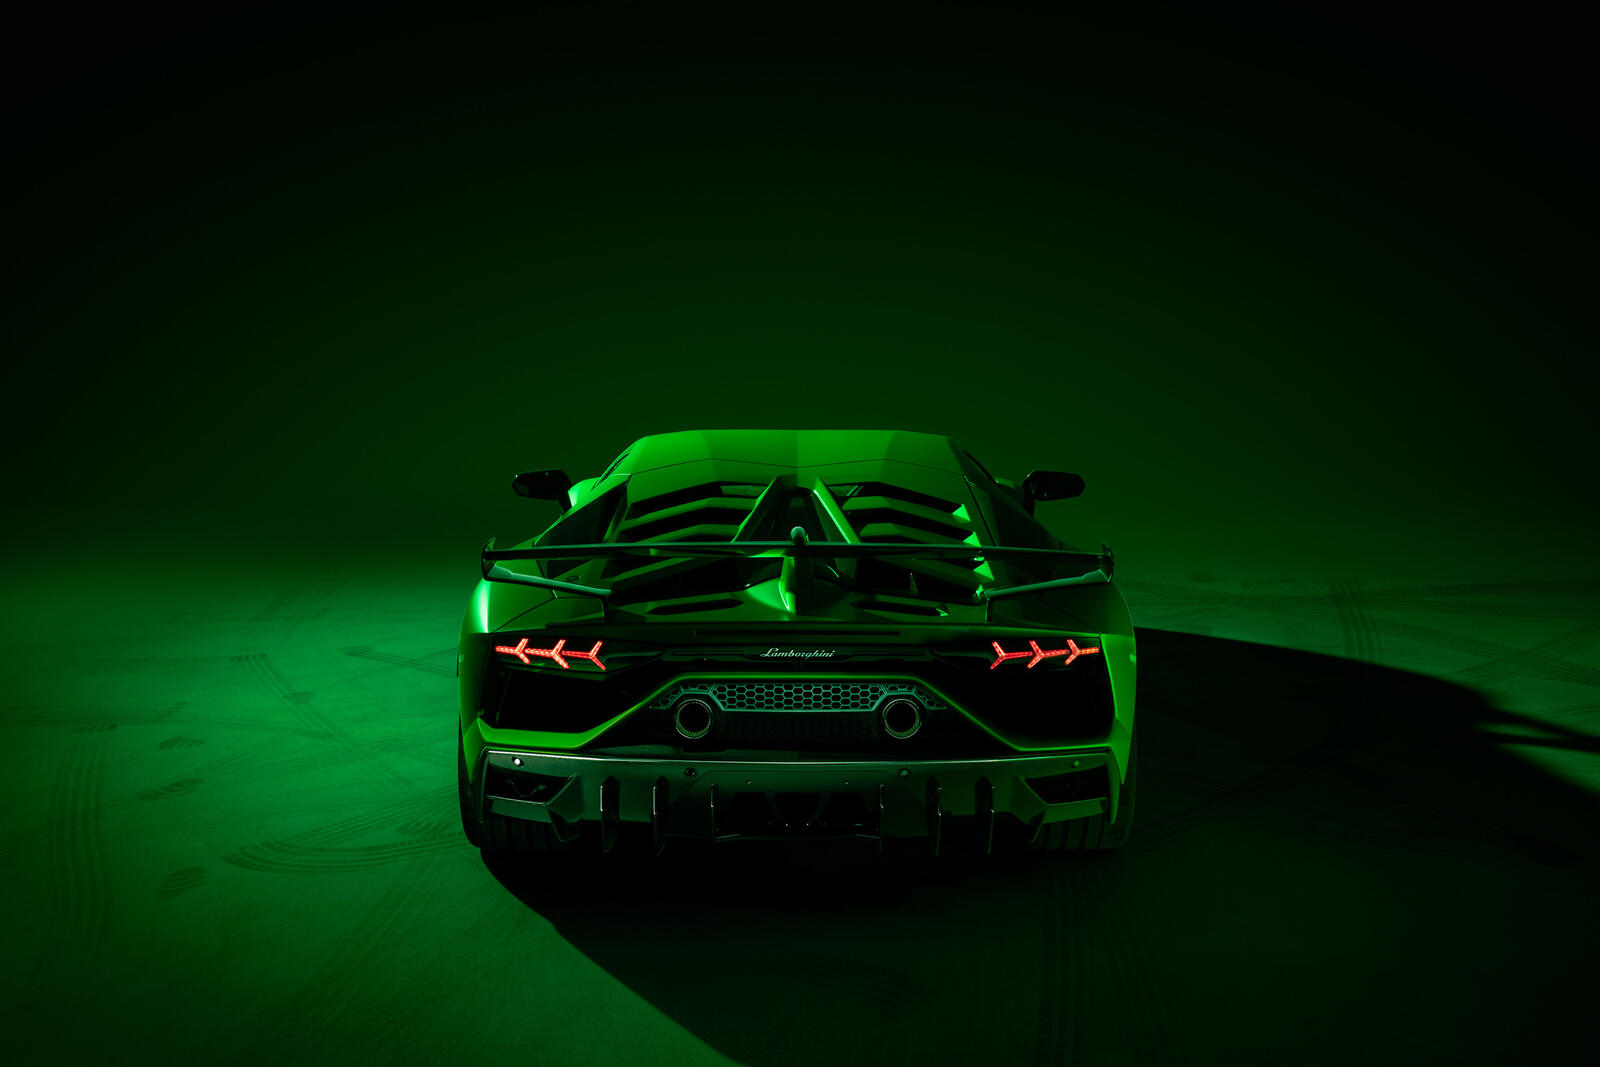 Wallpapers Behance Lamborghini Aventador SVJ 2018 cars on the desktop